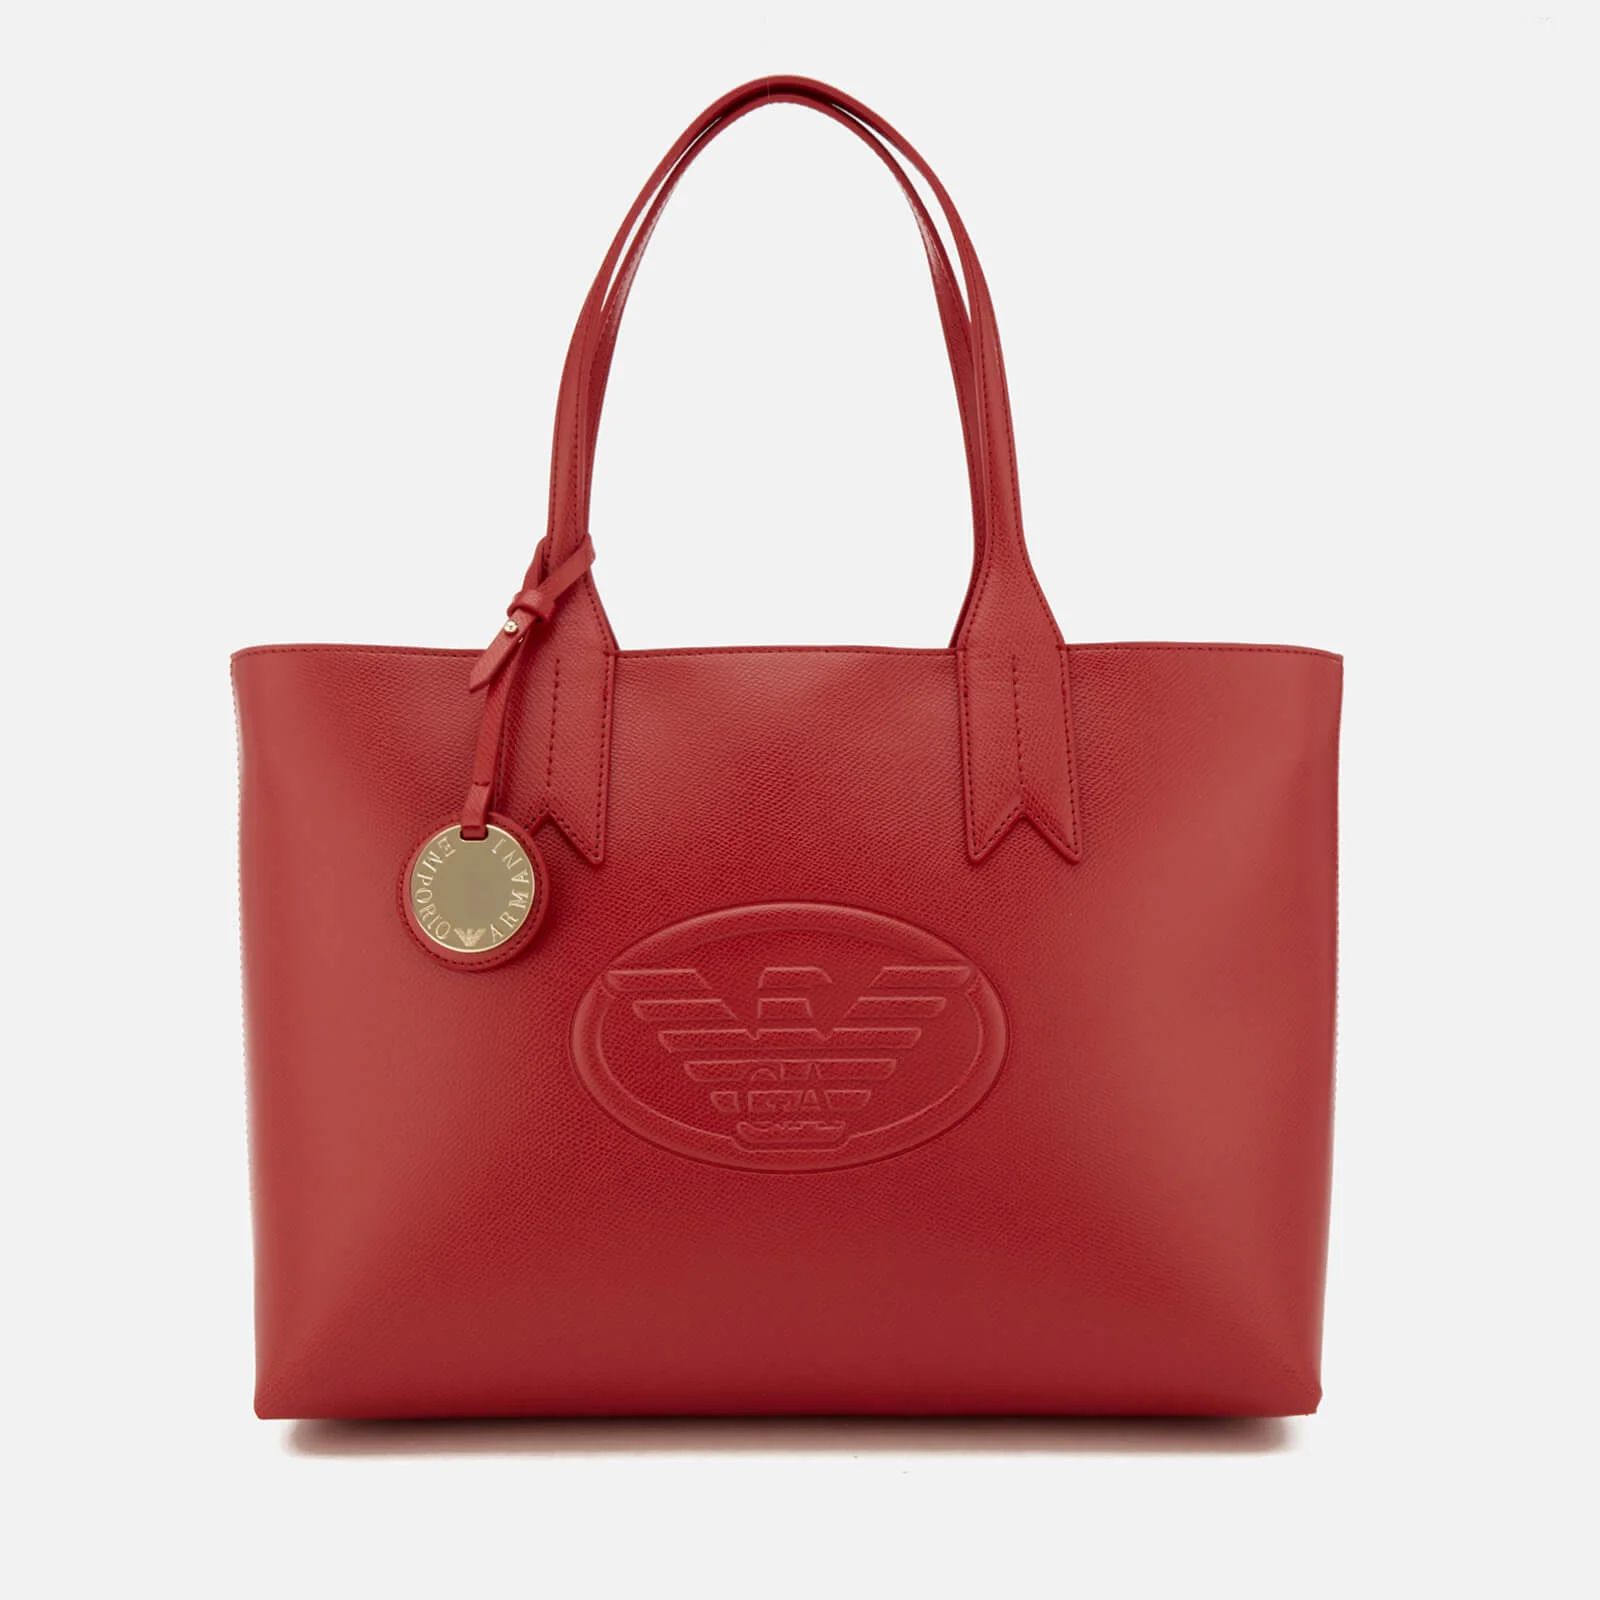 Emporio Armani Women's Shopping Bag - Red Image 1